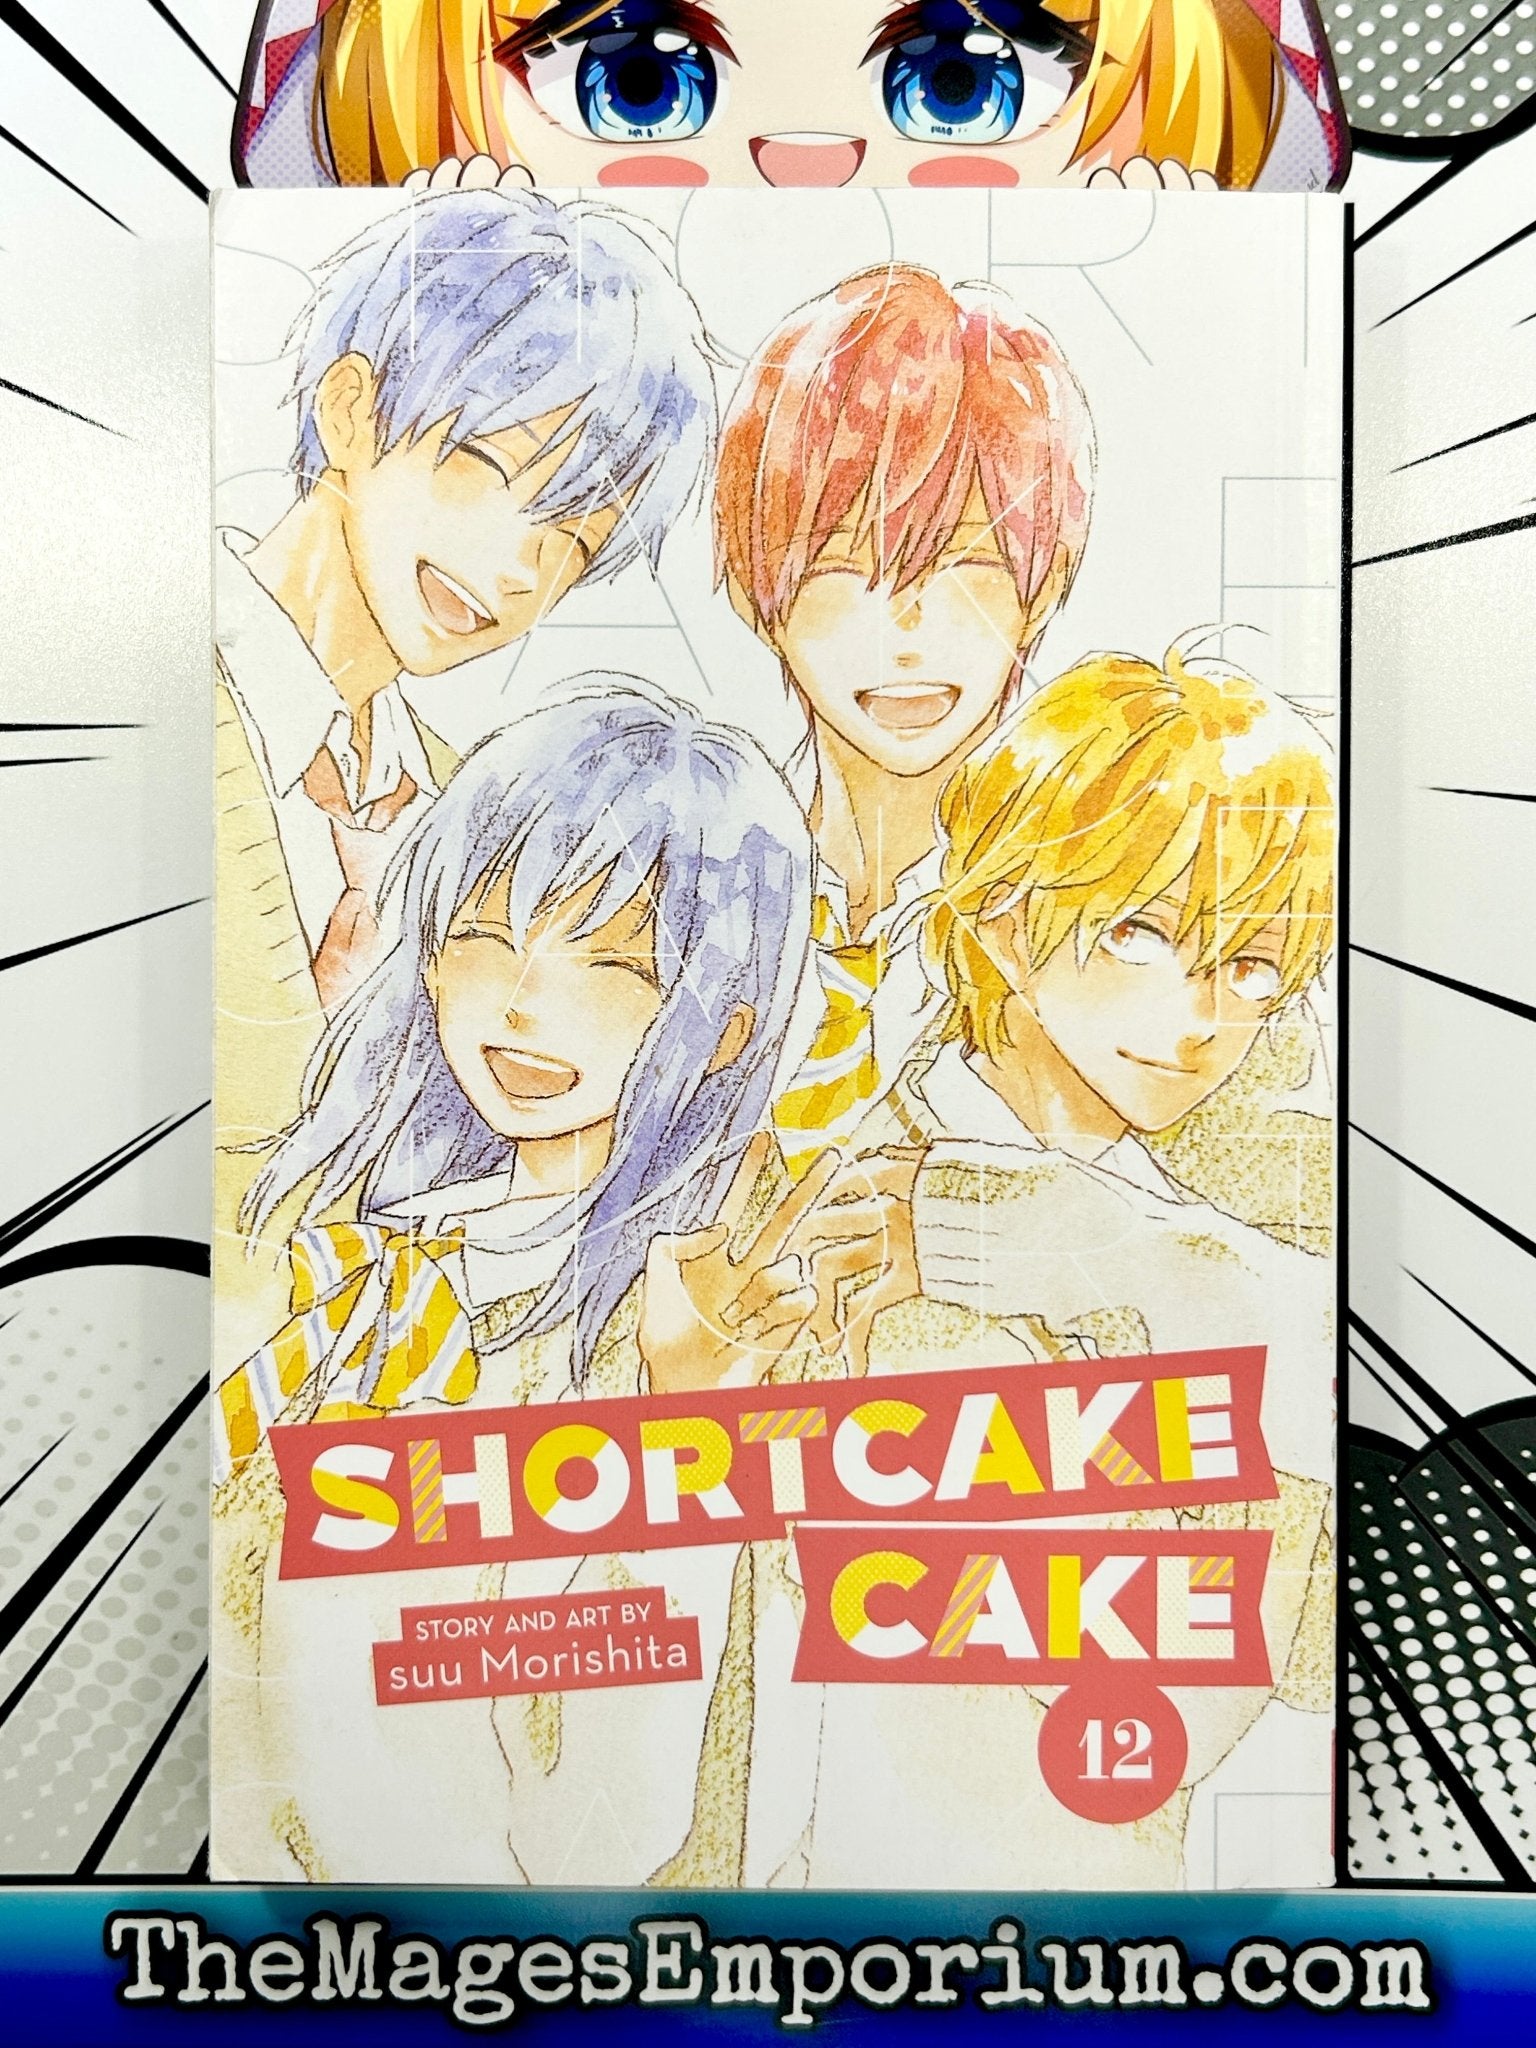 Read Short Cake Cake Chapter 5 on Mangakakalot